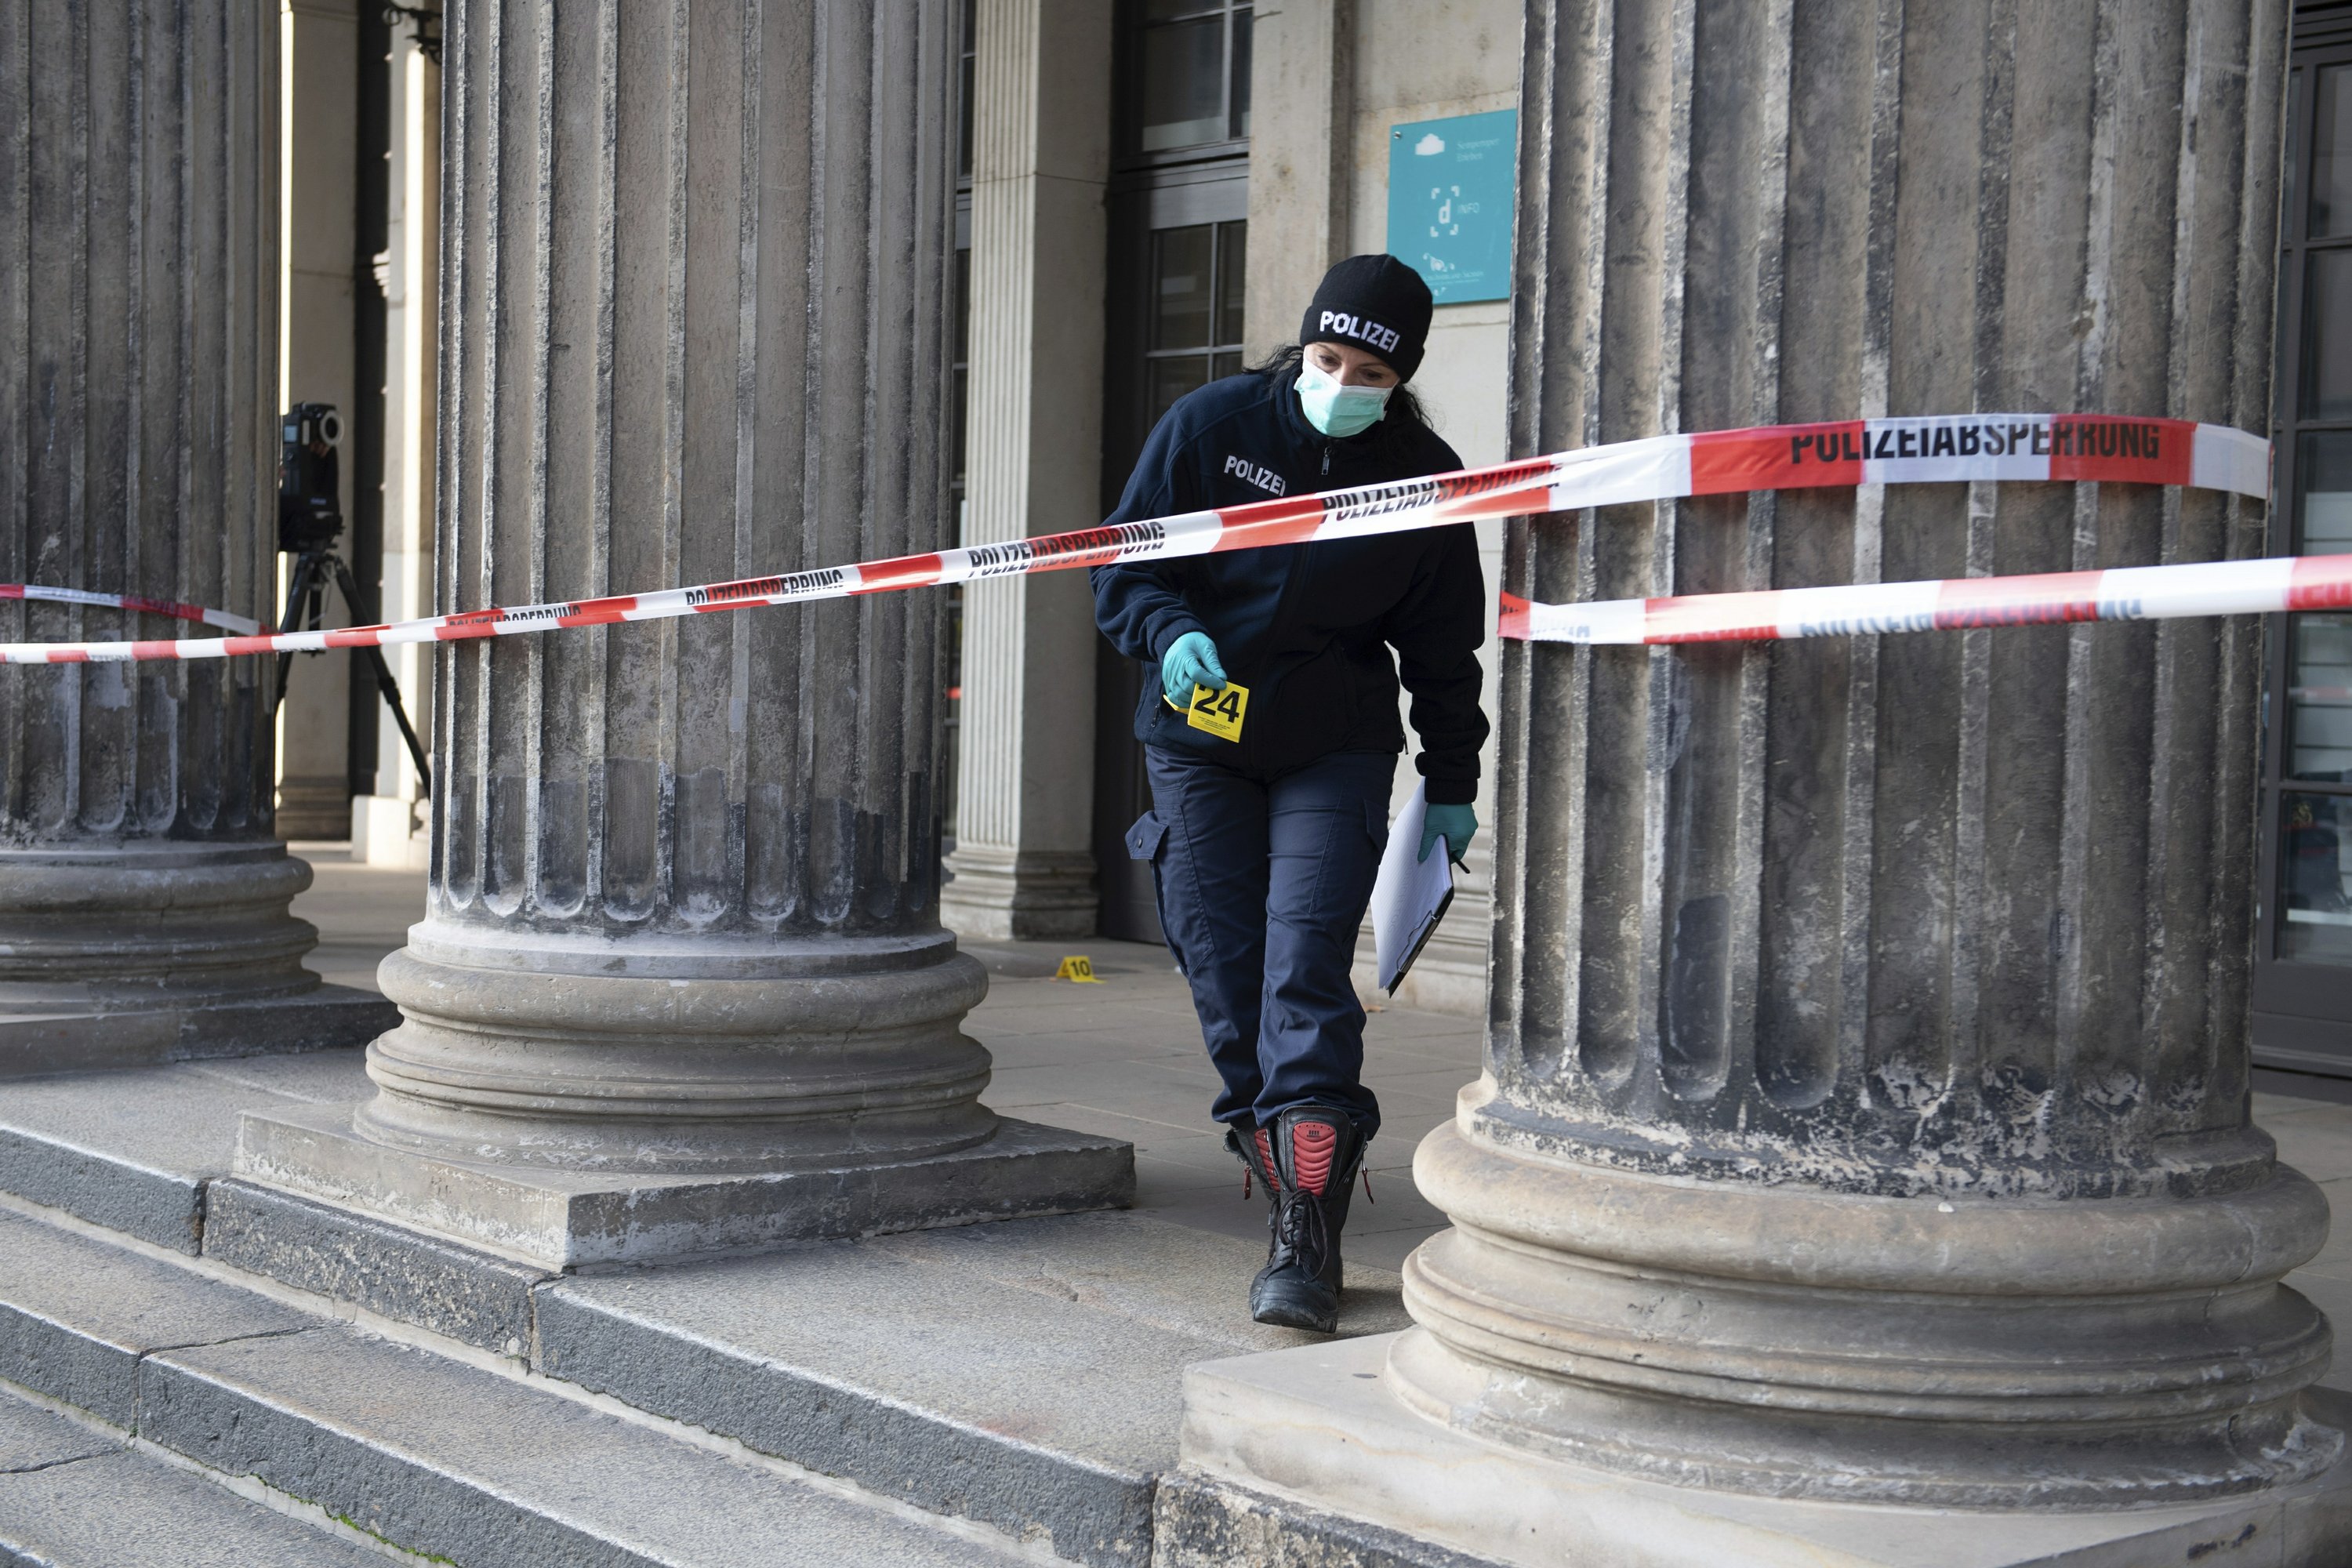 Dresden museum burglary, billion euros taken in stolen items. Image via AP.